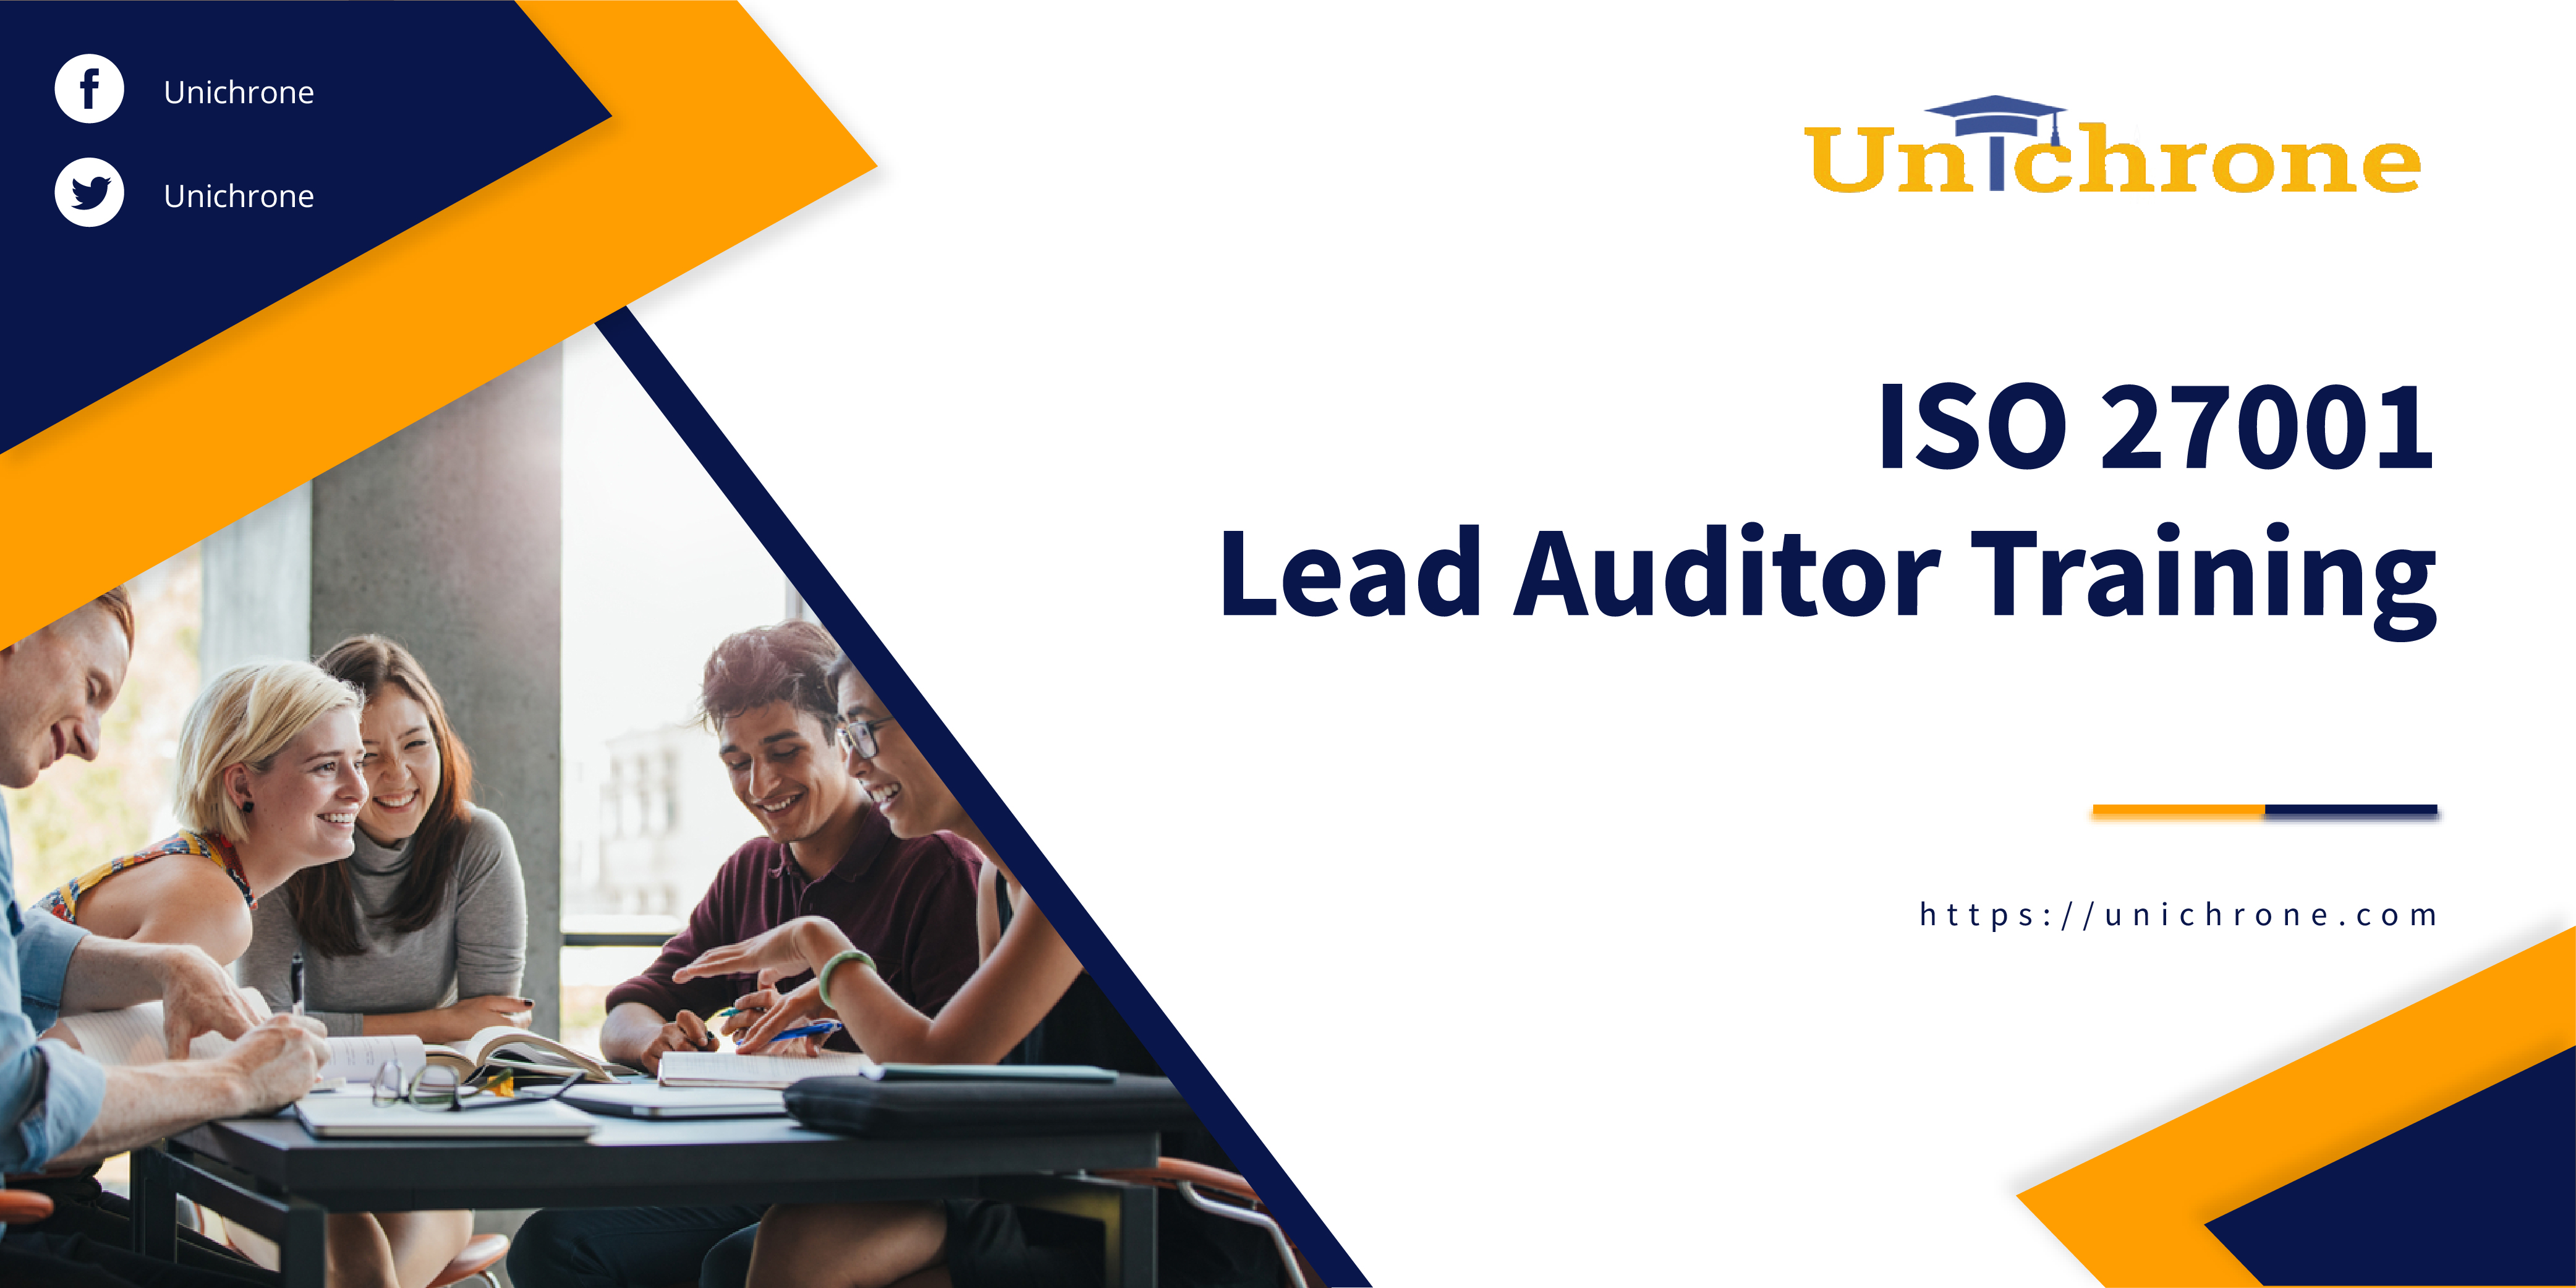 ISO 27001 Lead Auditor Training in Pattaya Thailand, Bangalore, Pattaya, Thailand